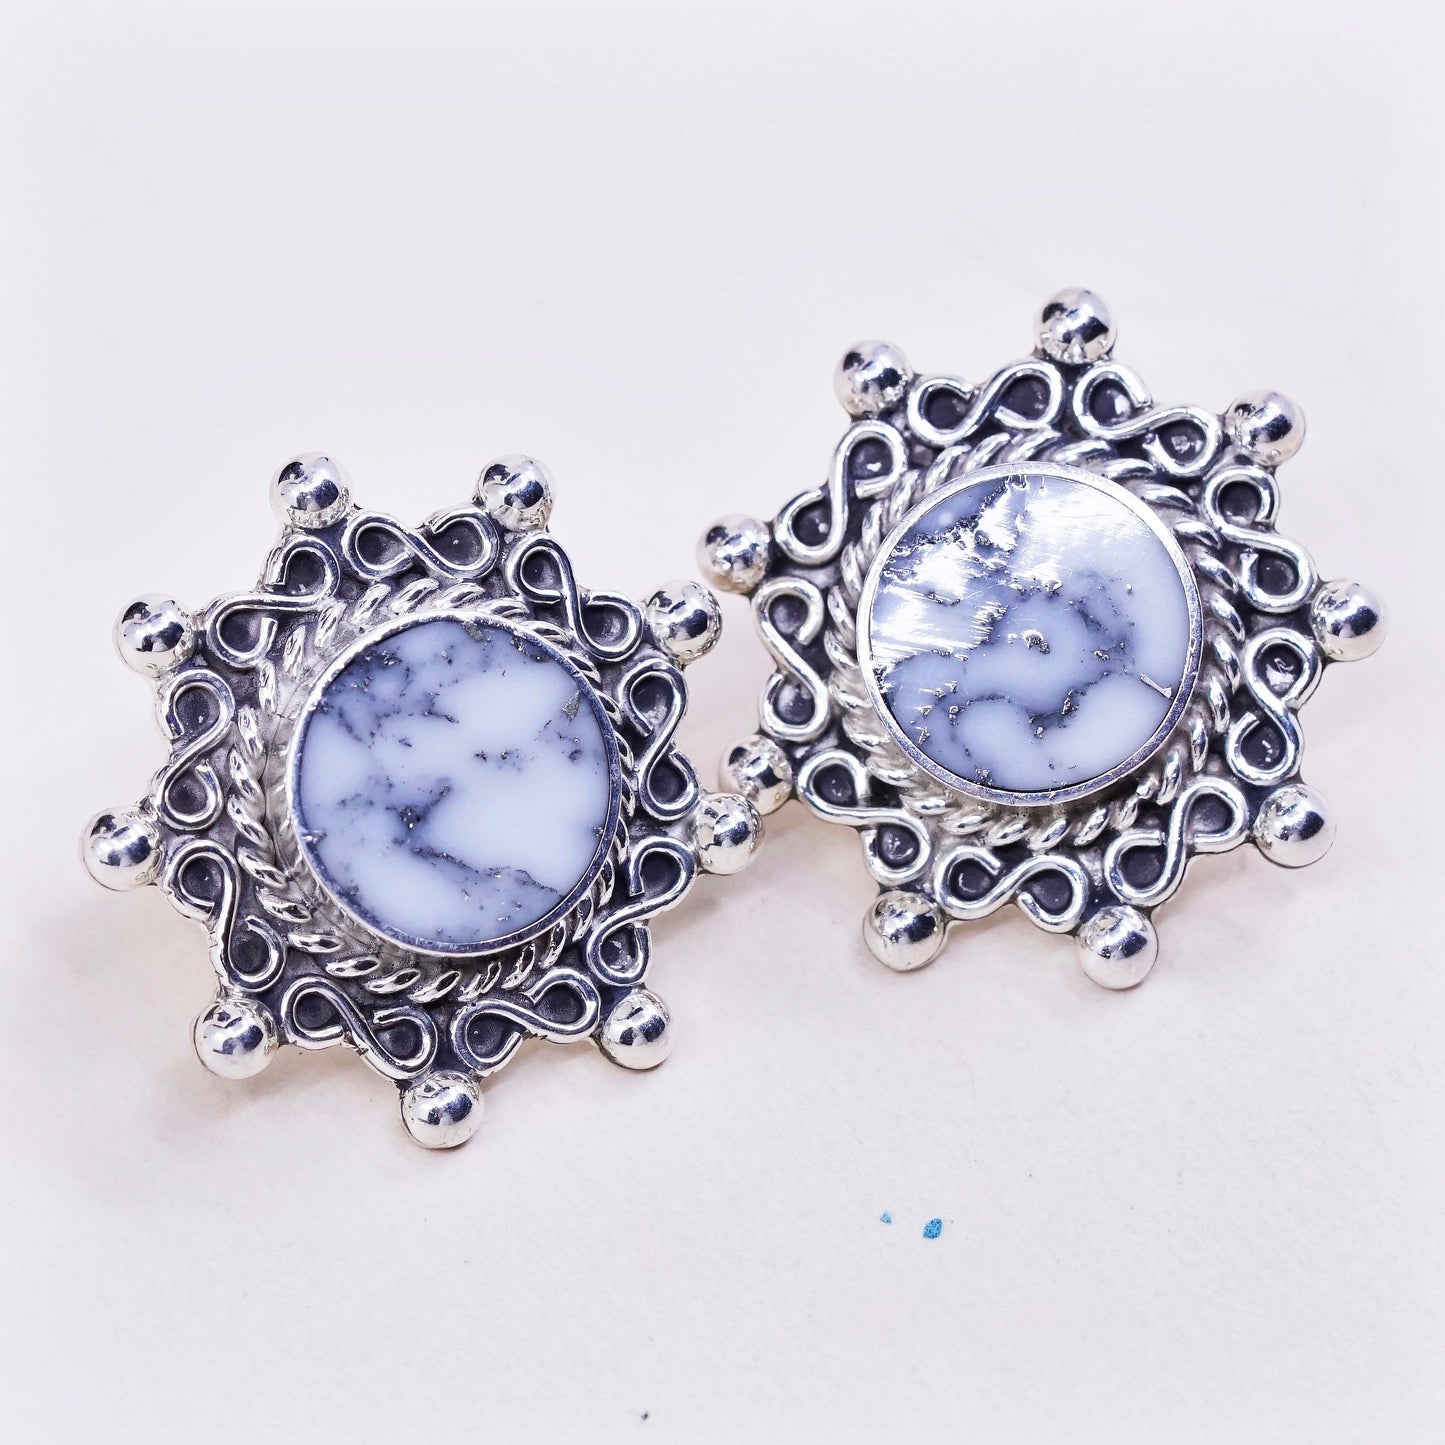 Mexico Sterling silver handmade earrings southwestern 925 studs w/ marble resin